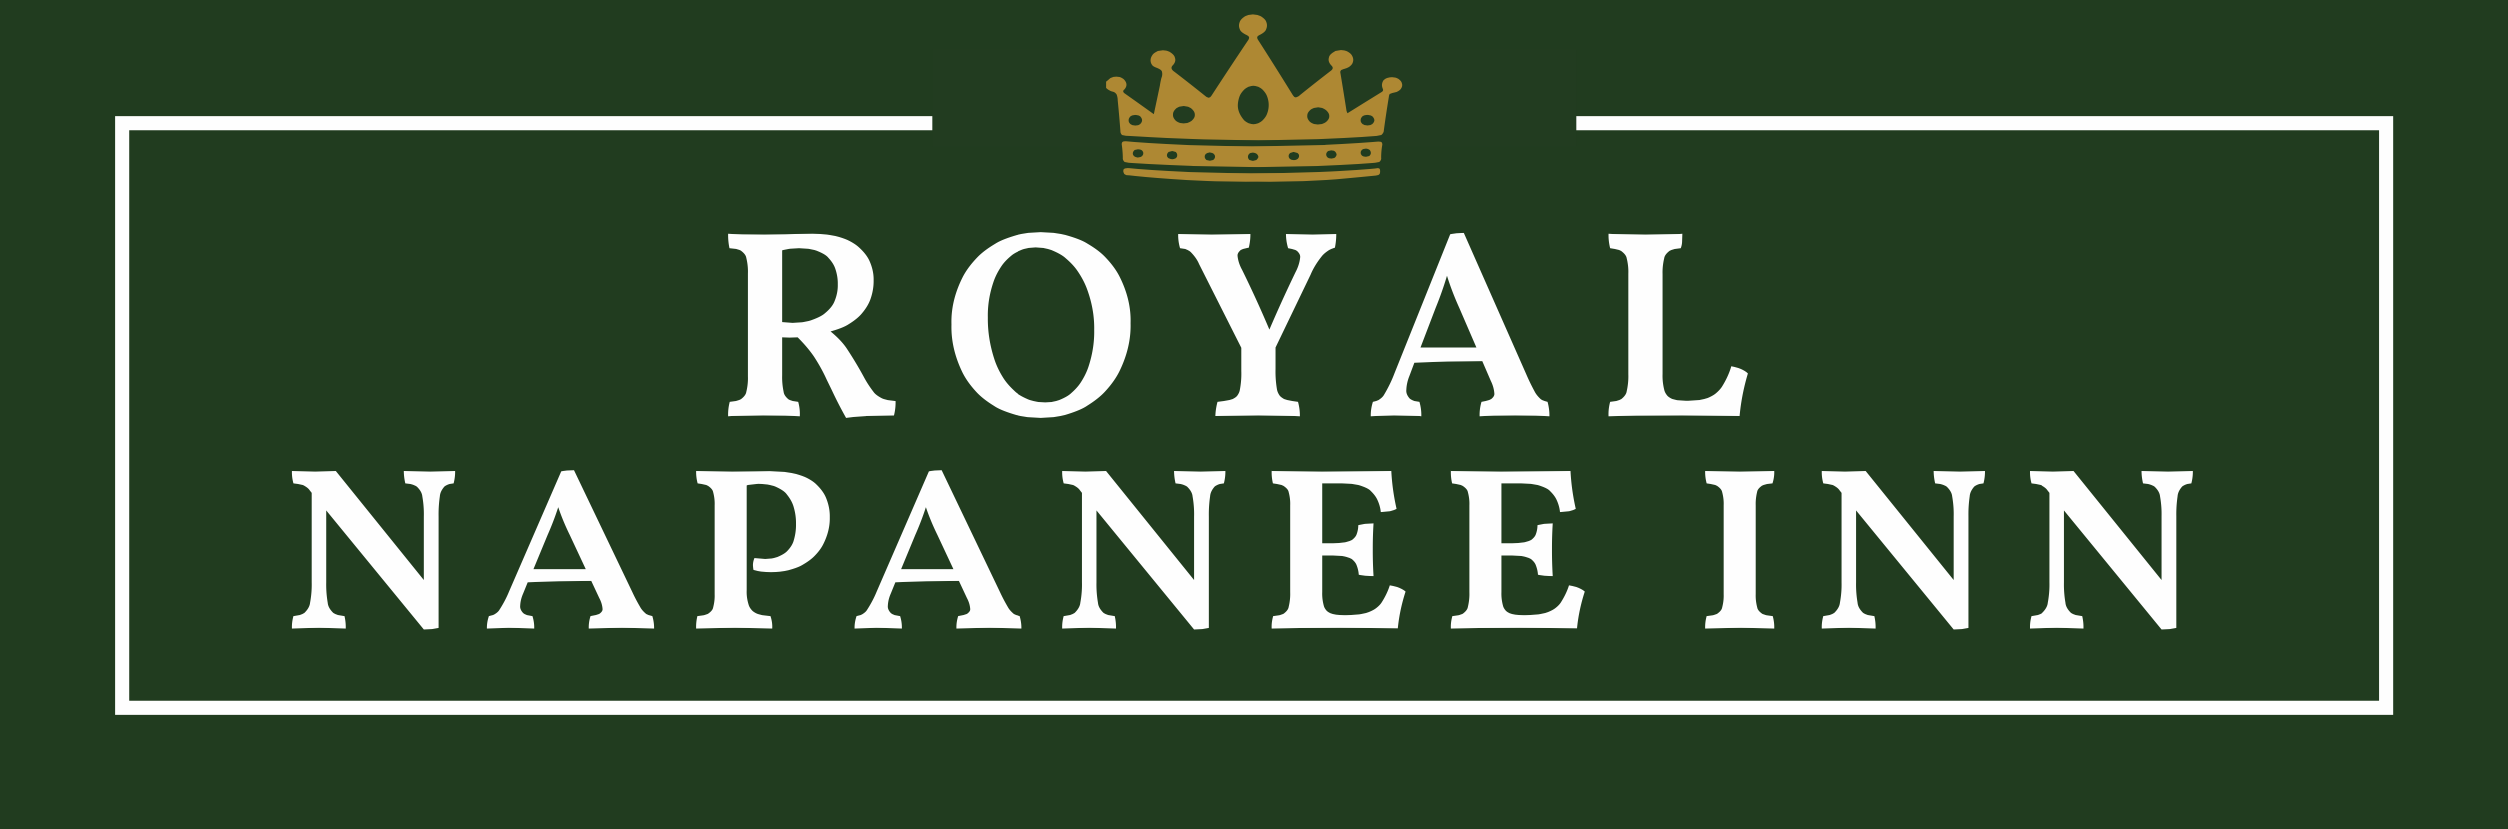 Royal Napanee Inn